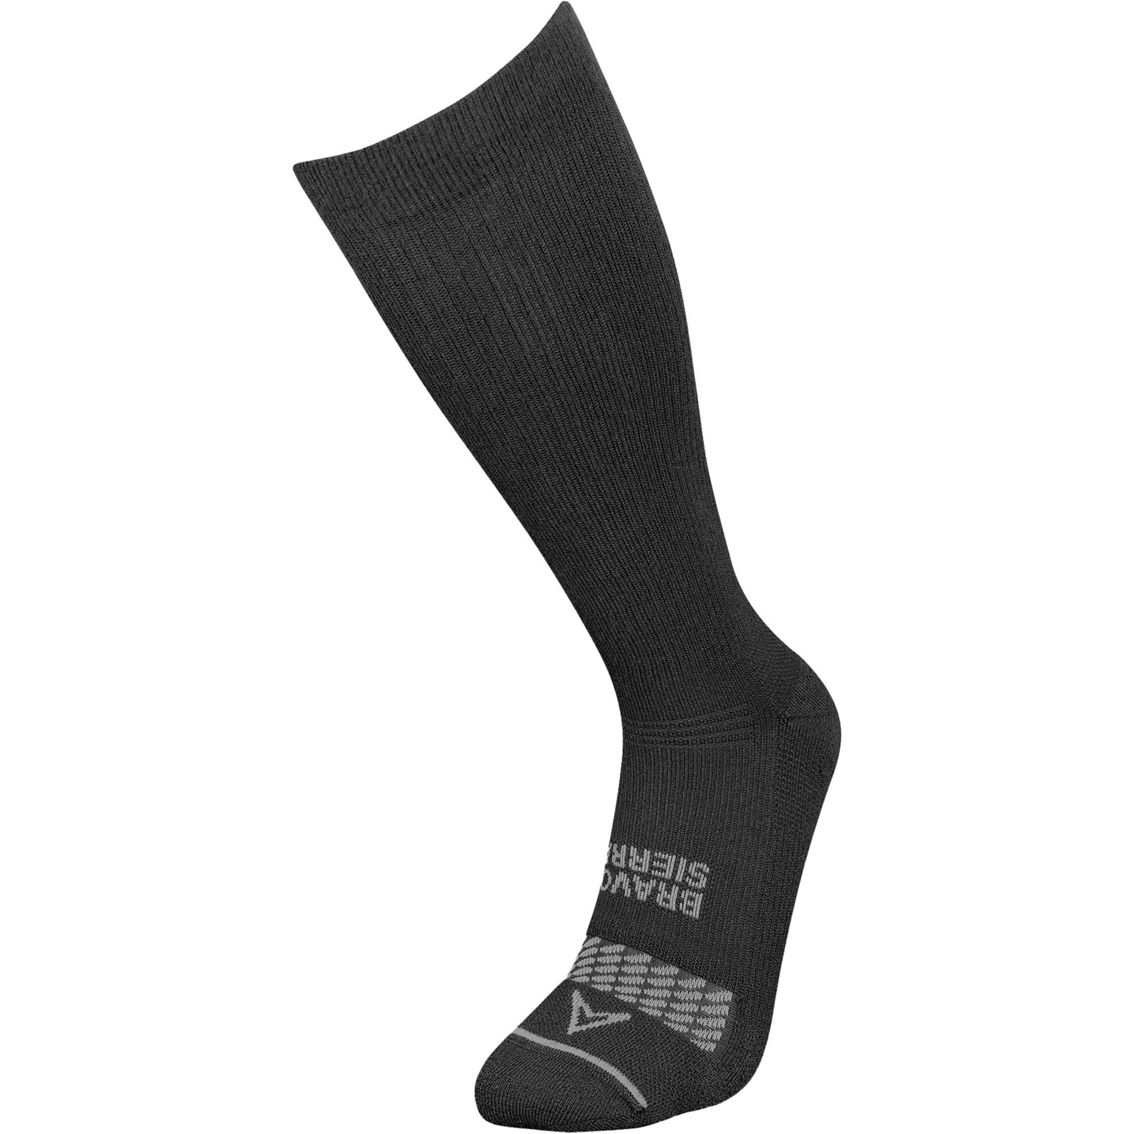 Bravo Sierra Men's Steel Toe Crew Socks | Socks | Clothing ...